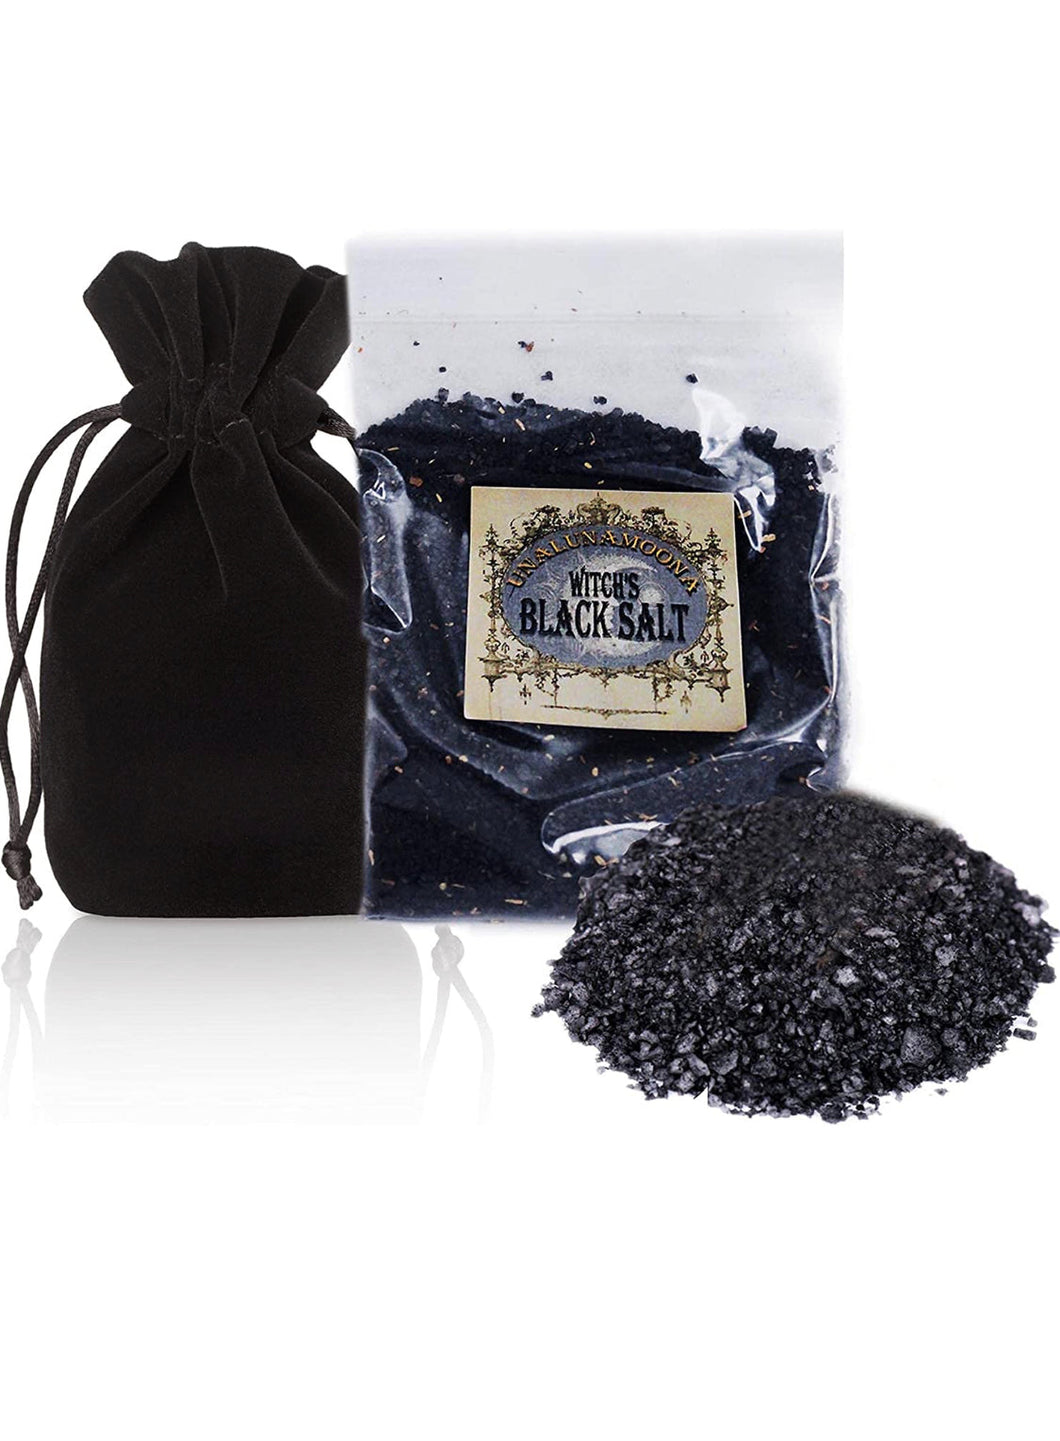 UnaLunaMoona Wicca Black Salt - 1lb (16oz) -| Black Salt for Protection Charged Using Dark  Moon Energy Witchcraft kit